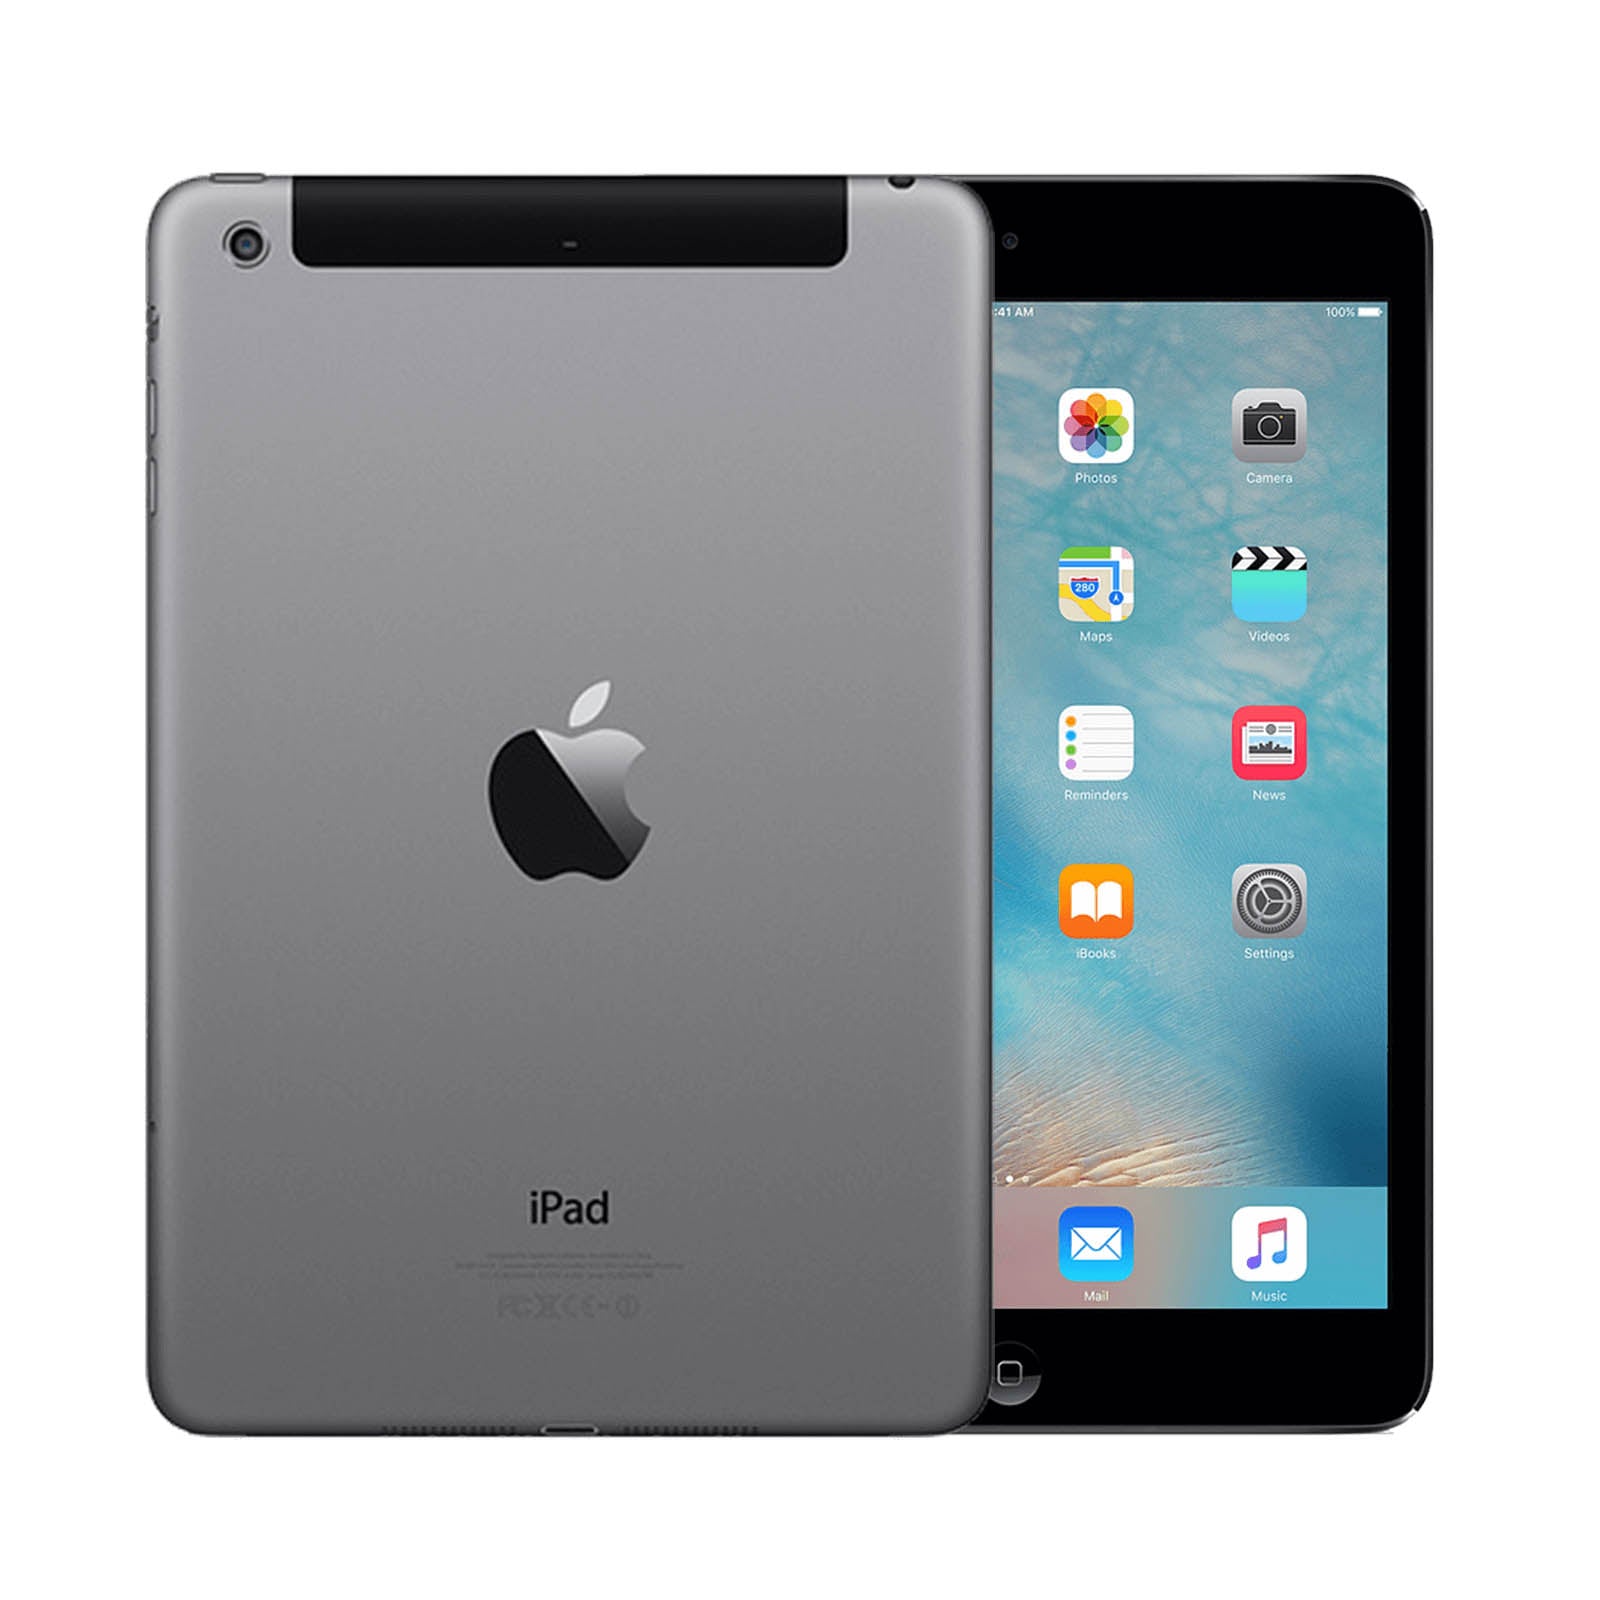 Apple iPad mini 3 128GB Space Grey Good - Unlocked